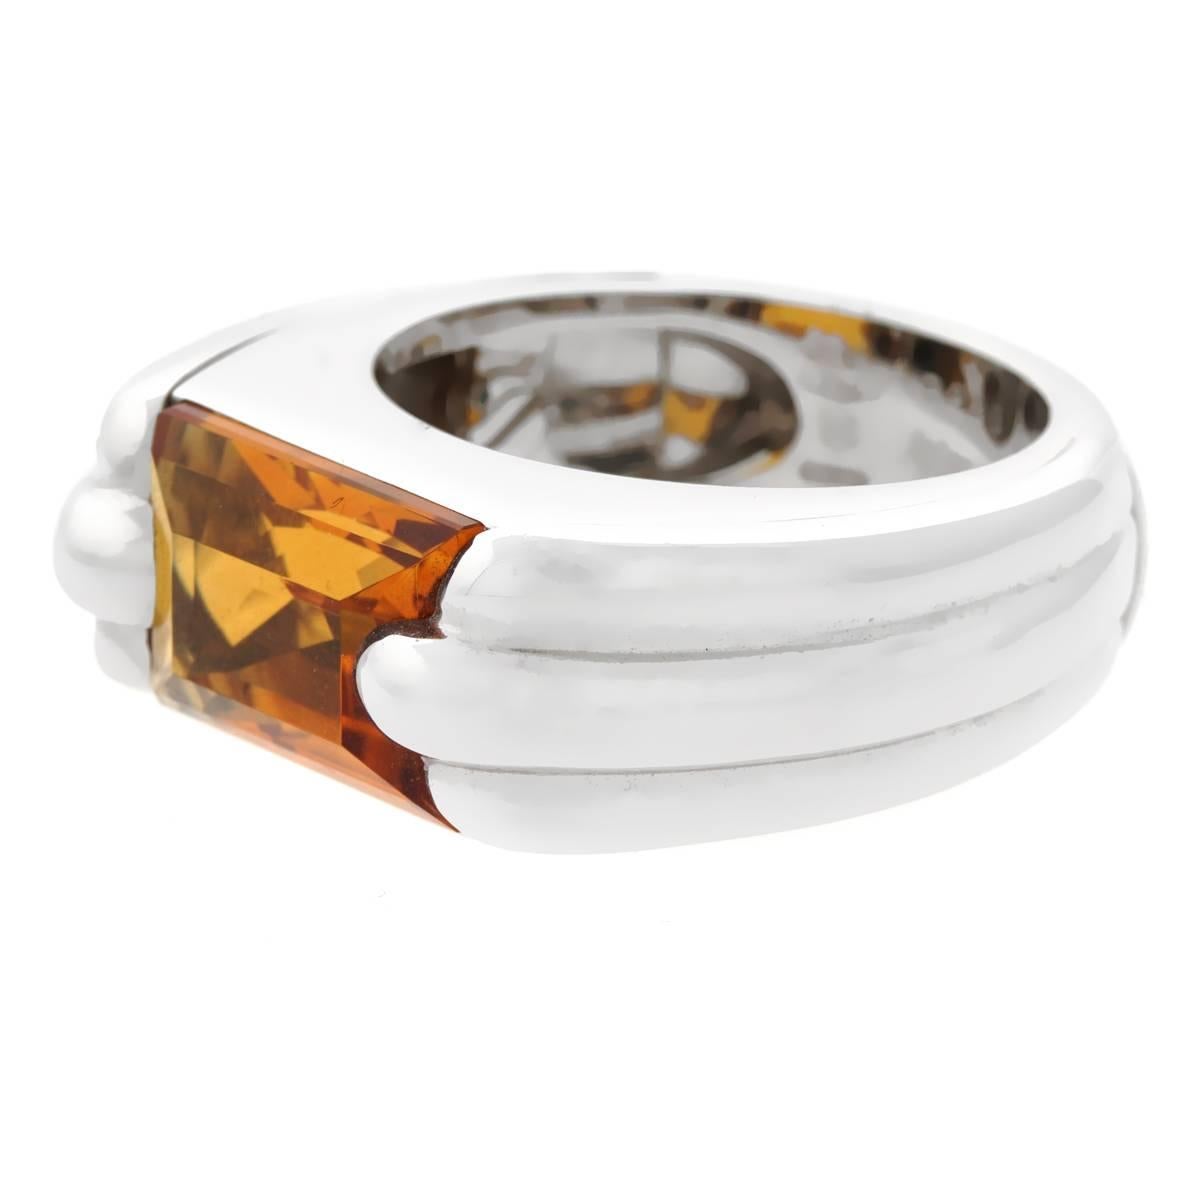 A chic Audemars Piguet ring featuring a citrine gemstone set in 18k white gold. Size 6.5

Sku:880